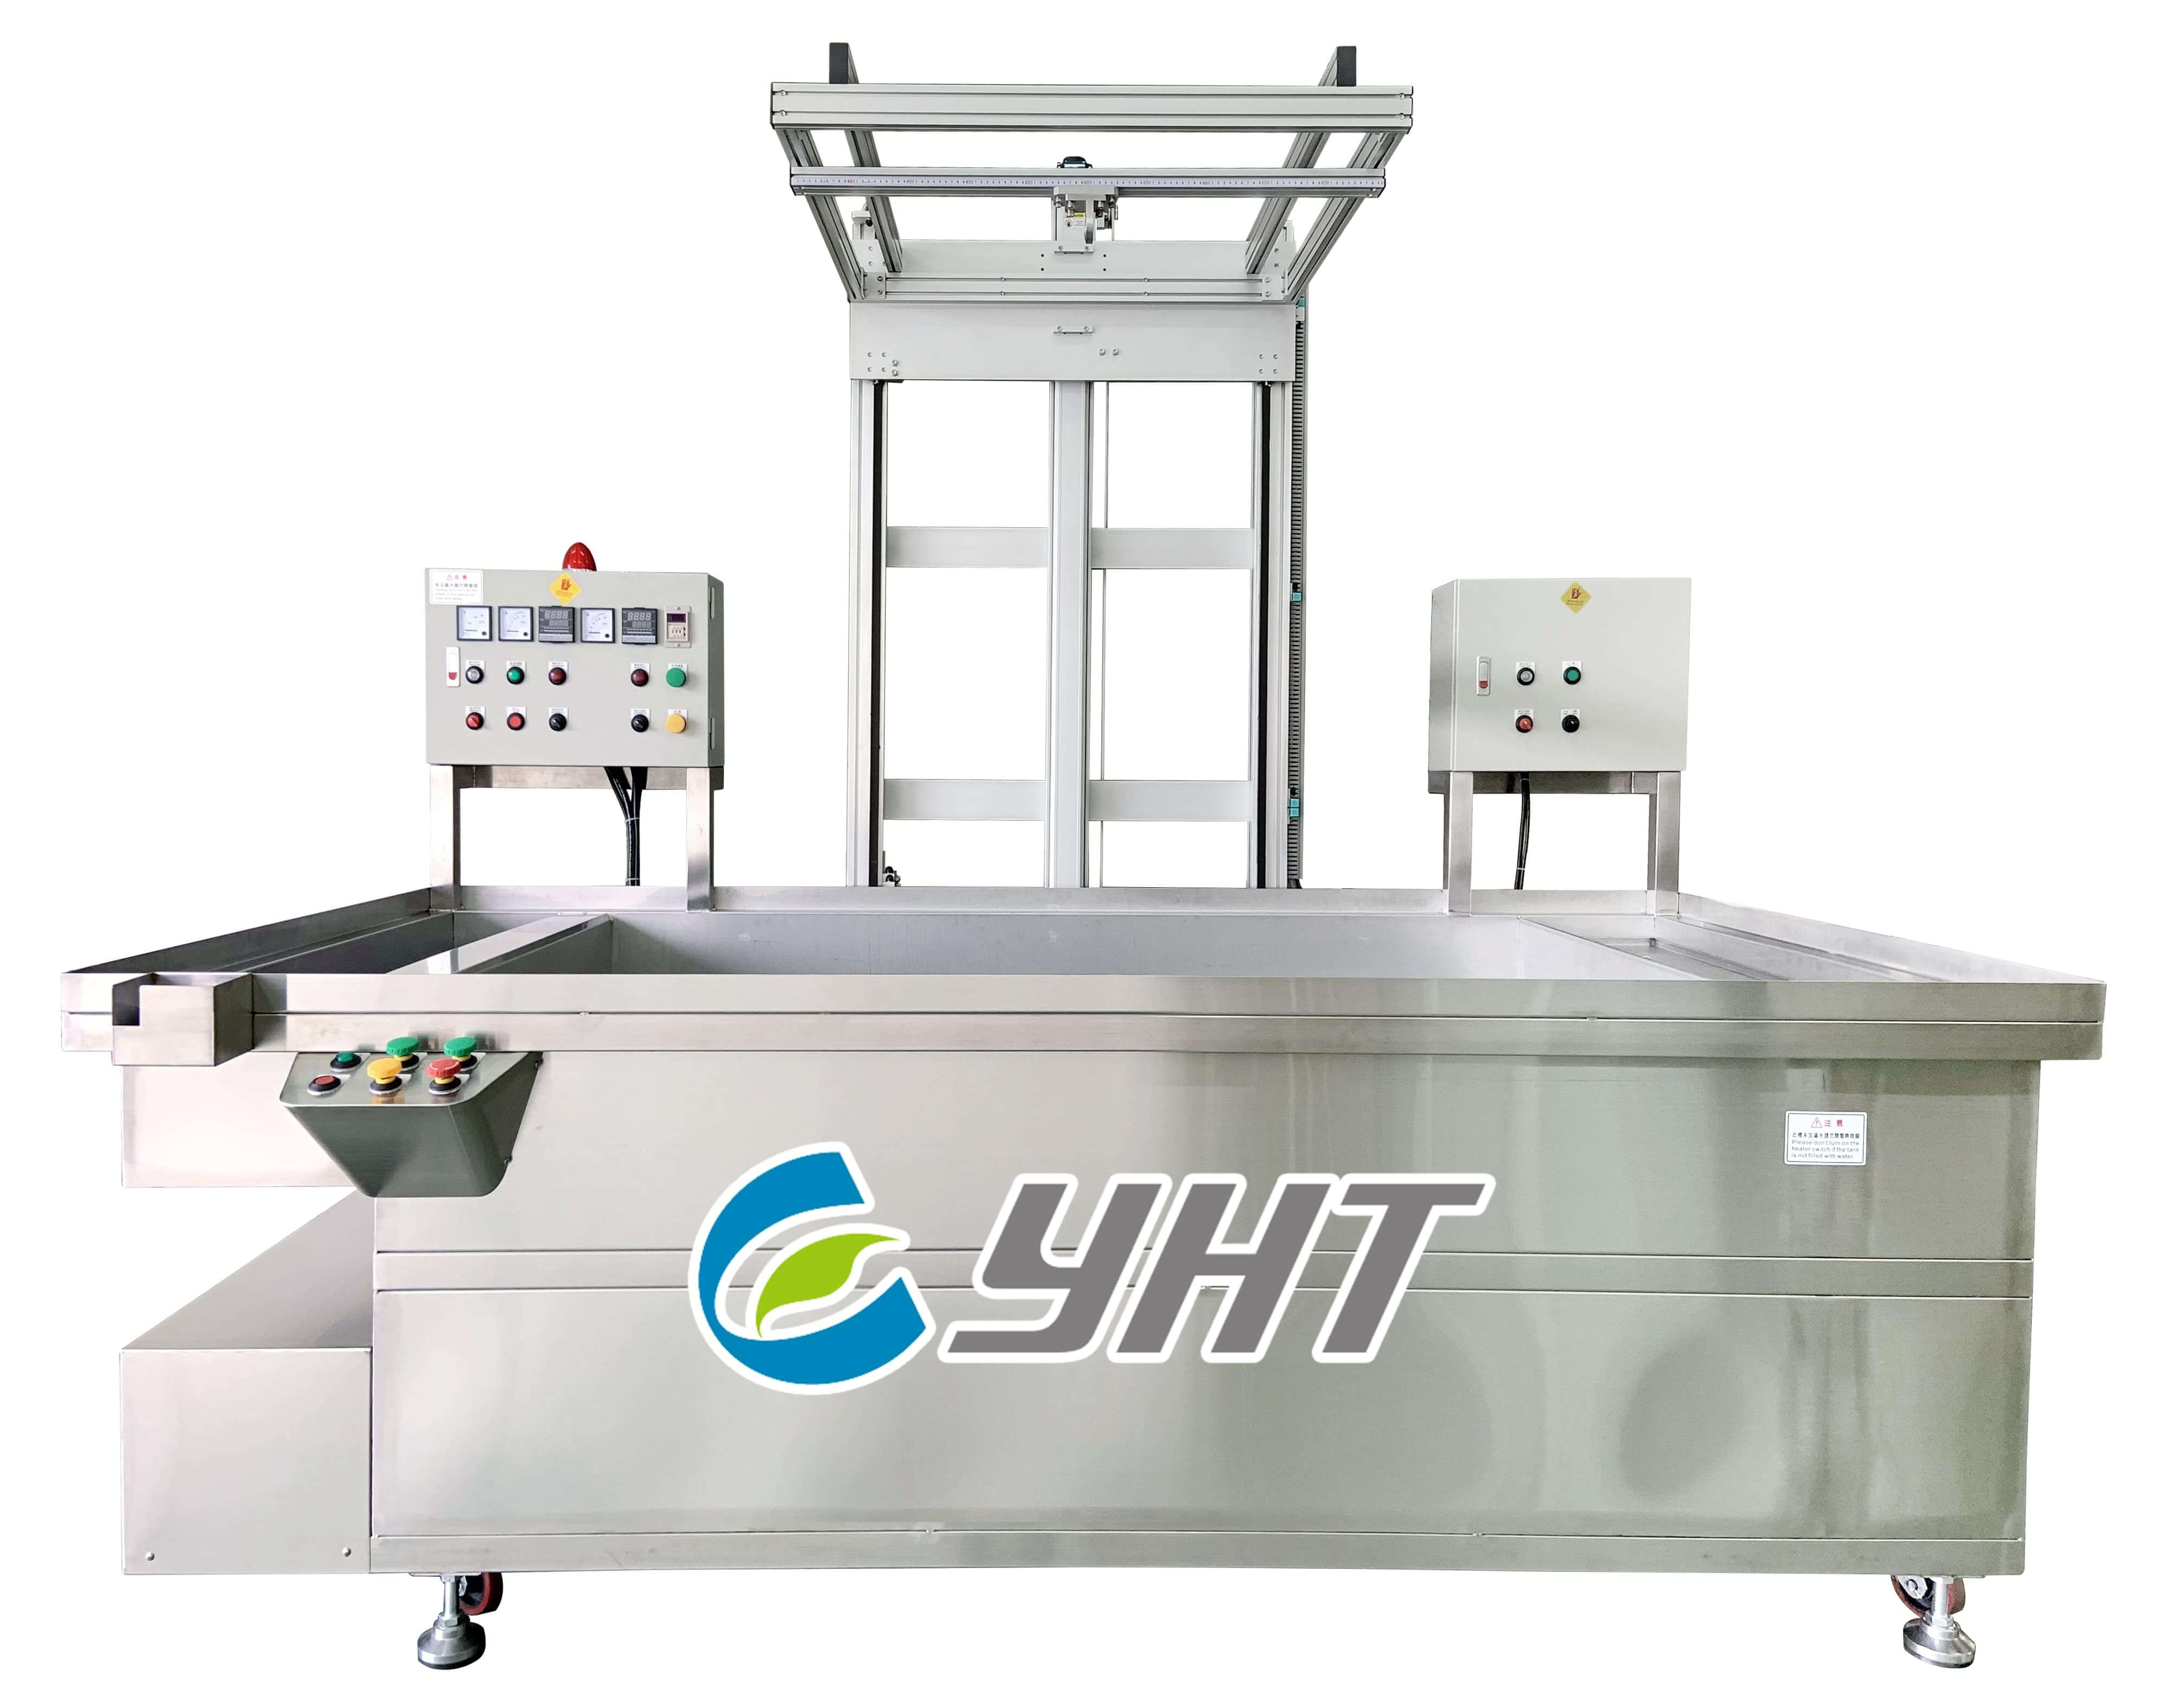 Hidroimpresion - Water Transfer Printing